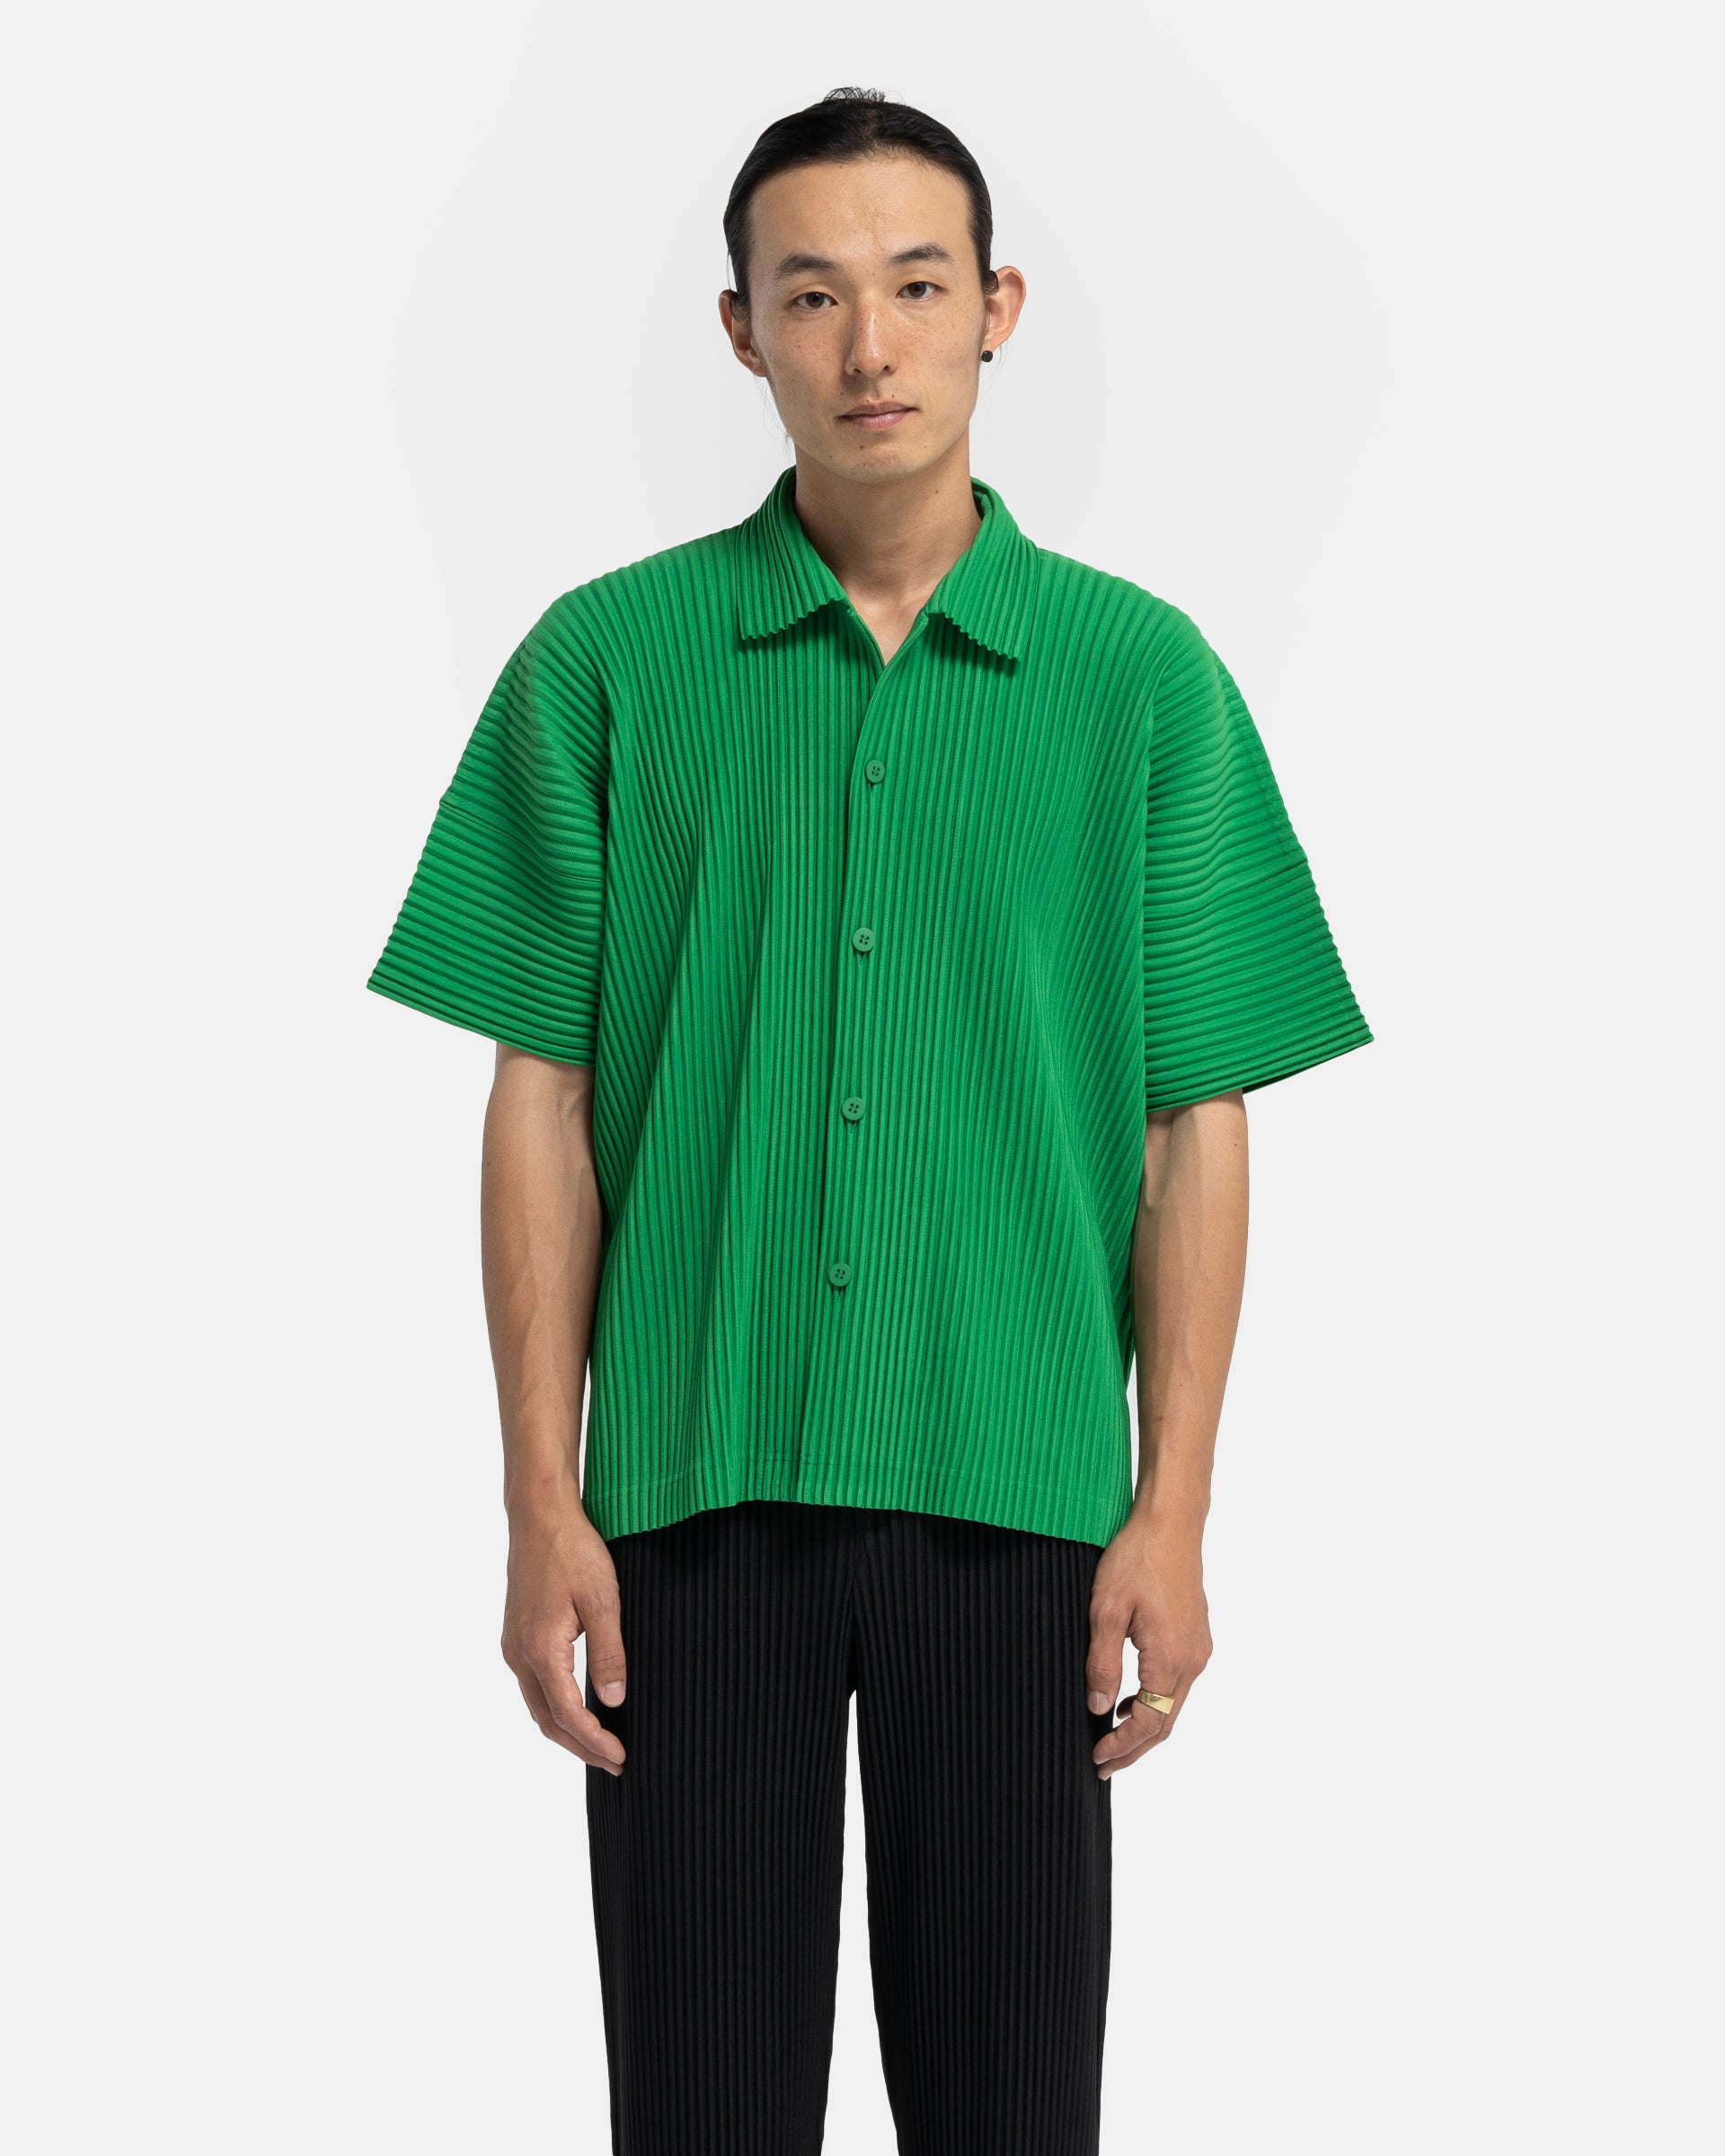 MC July Shirt in Emerald Green